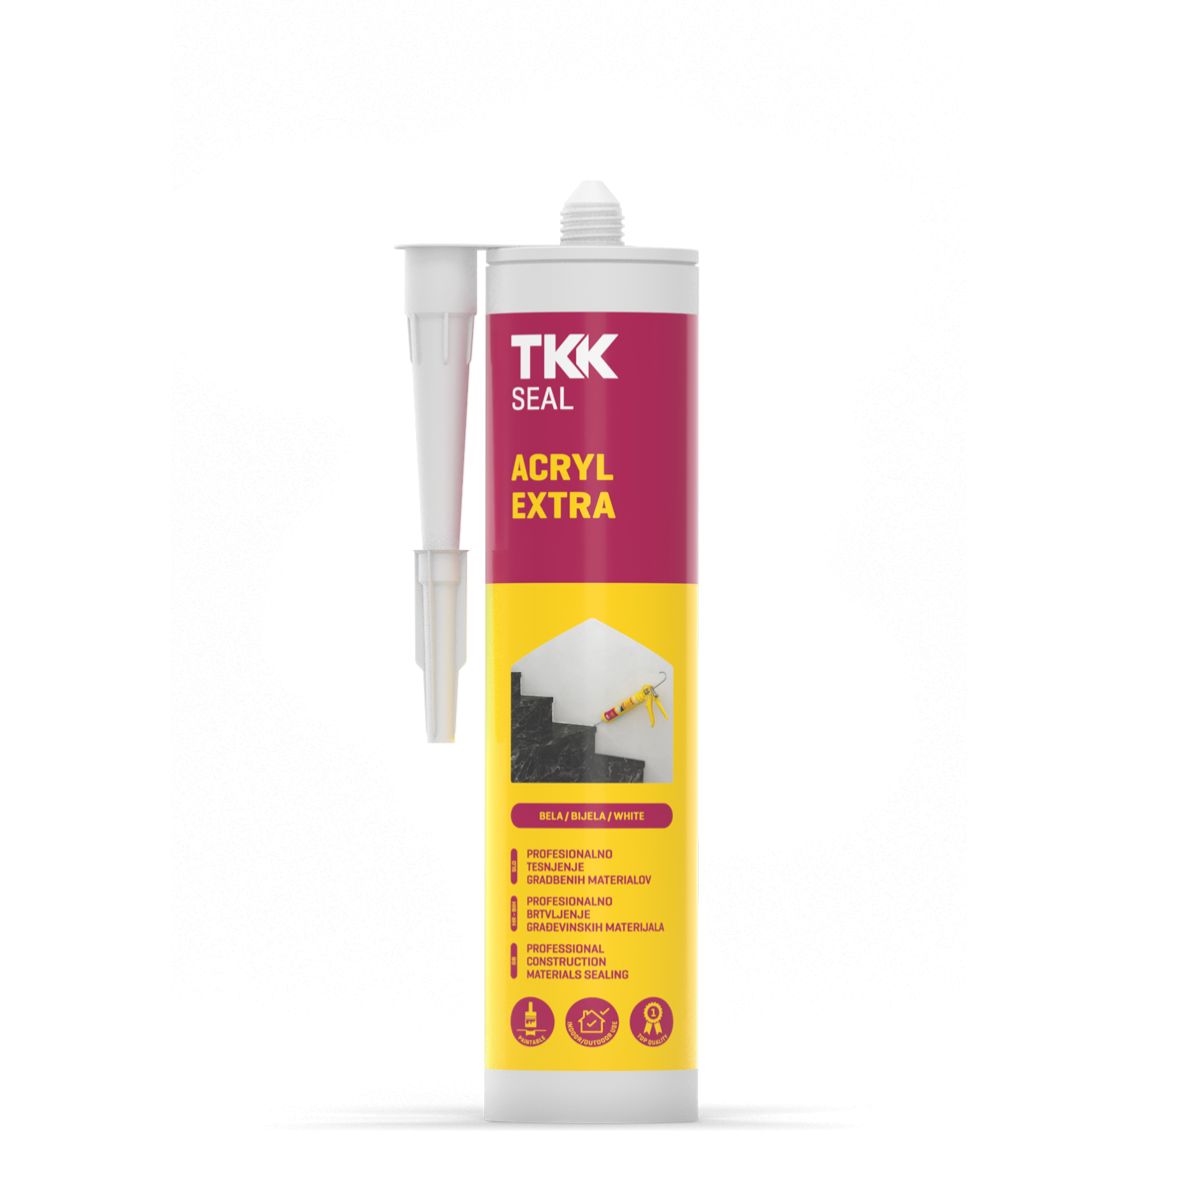 TKK Seal Acryl Extra